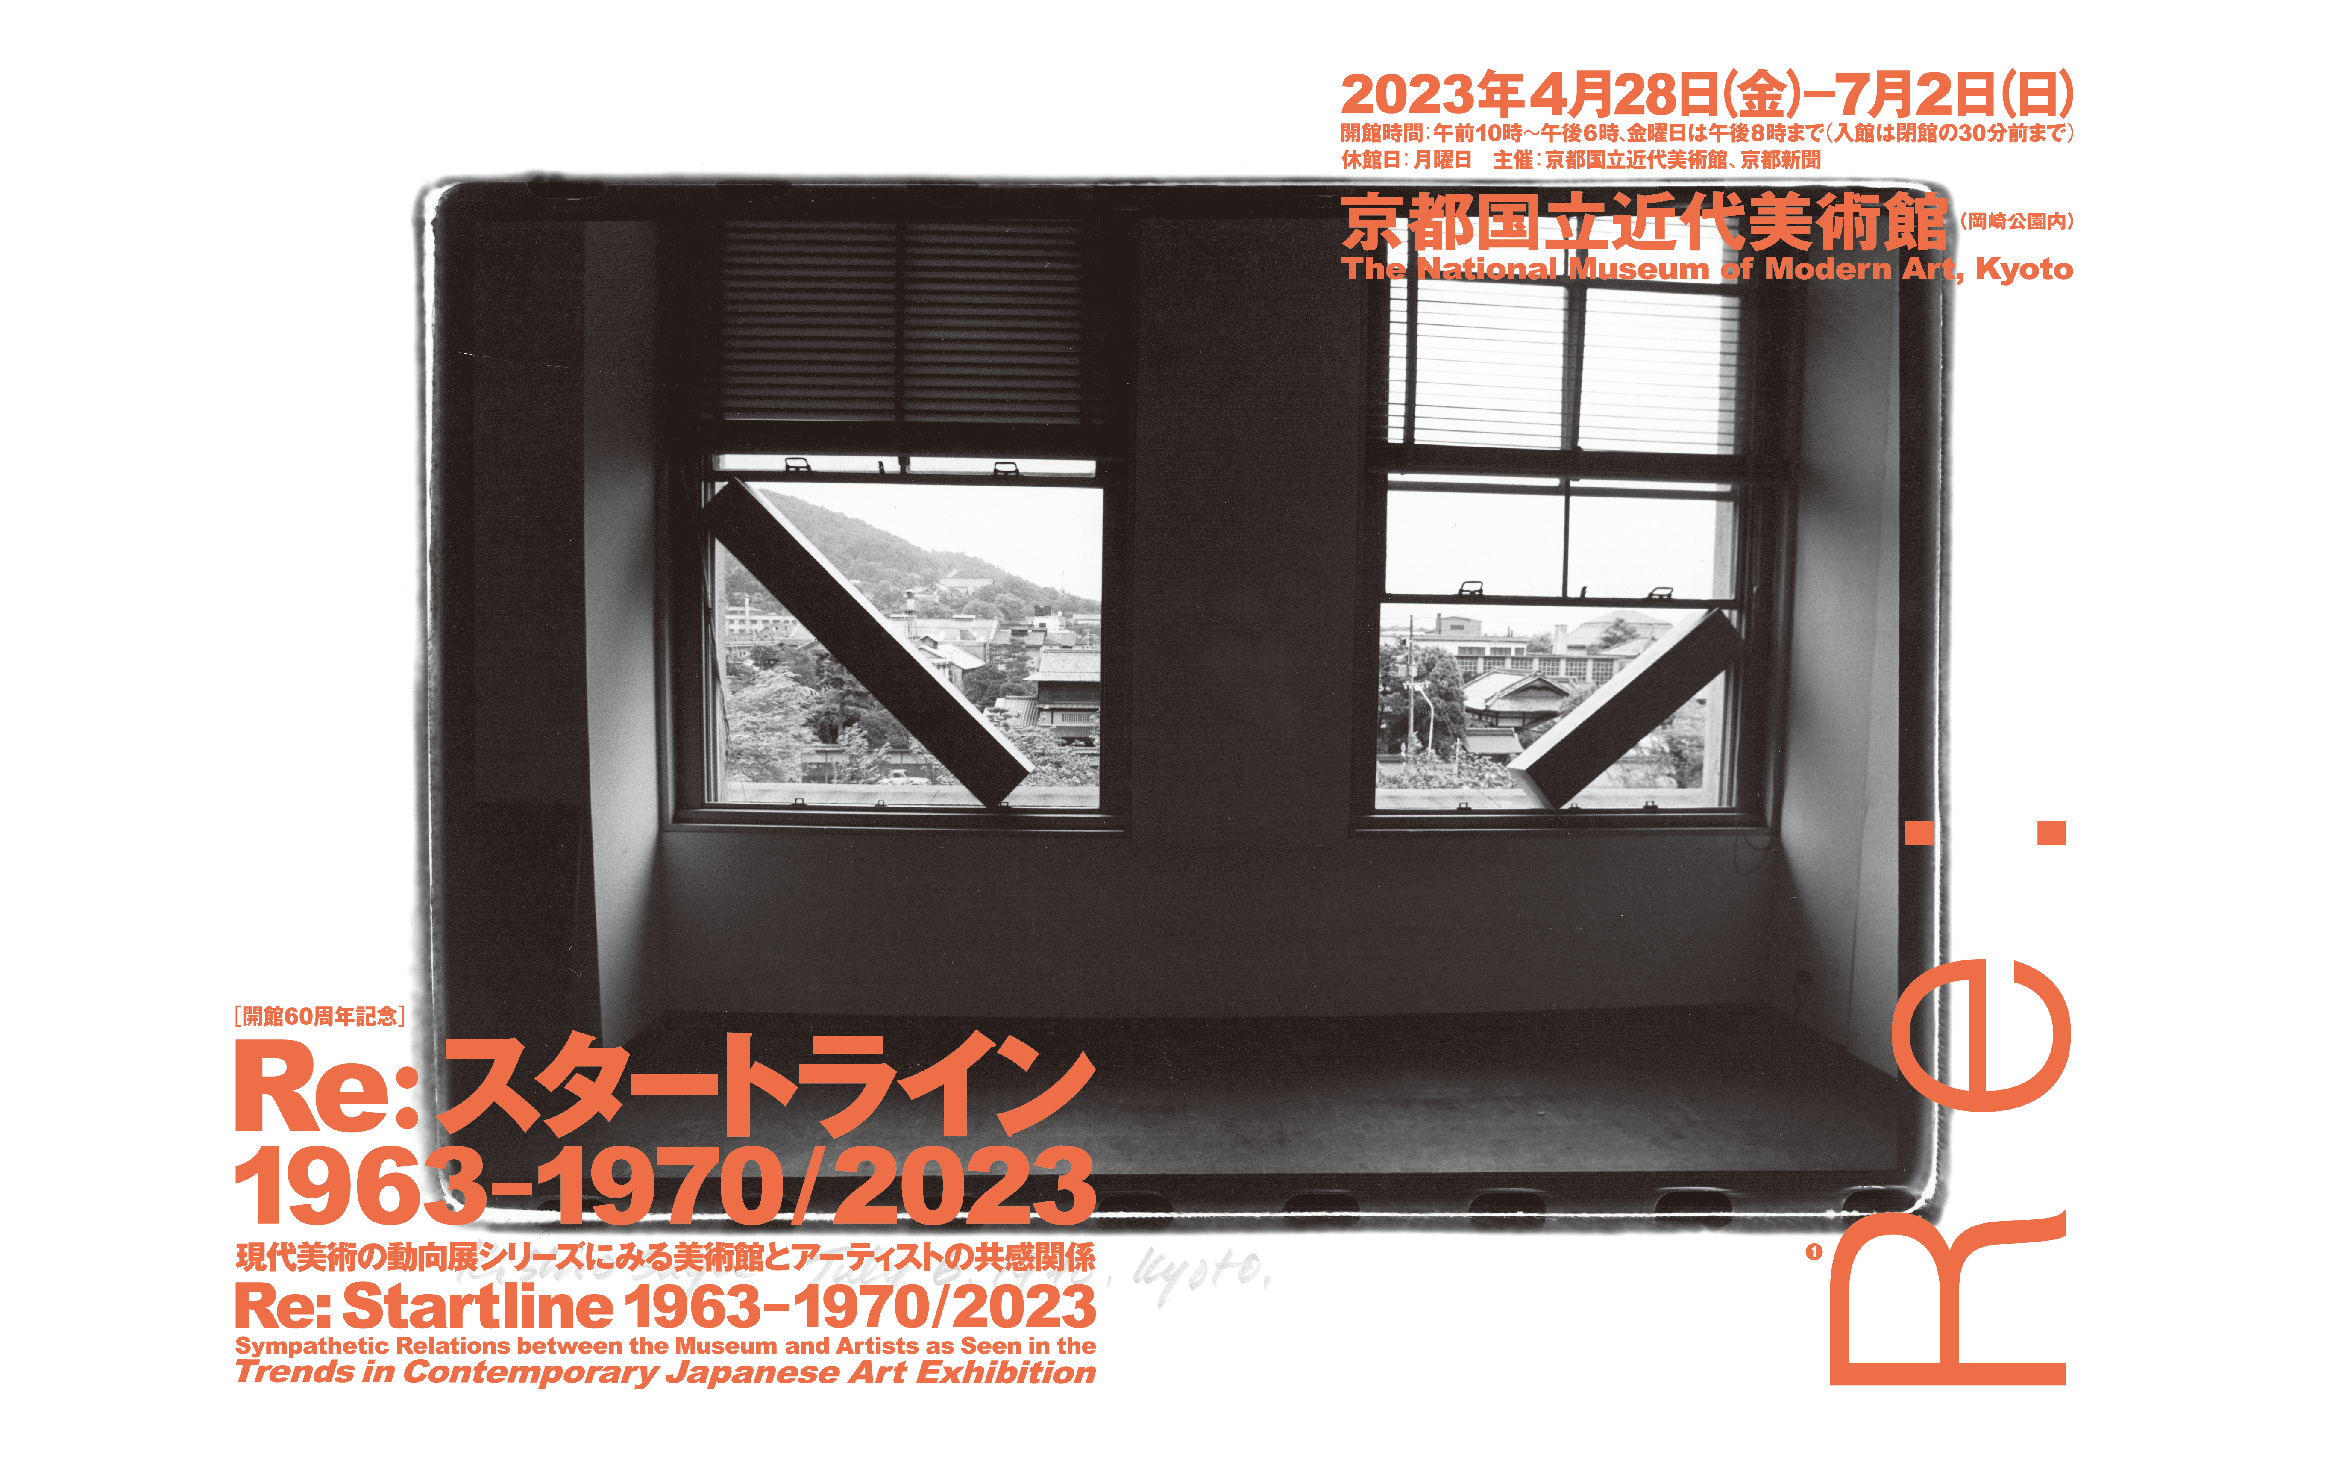 Re: スタートライン 1963－1970/2023 現代美術の動向展シリーズにみる 